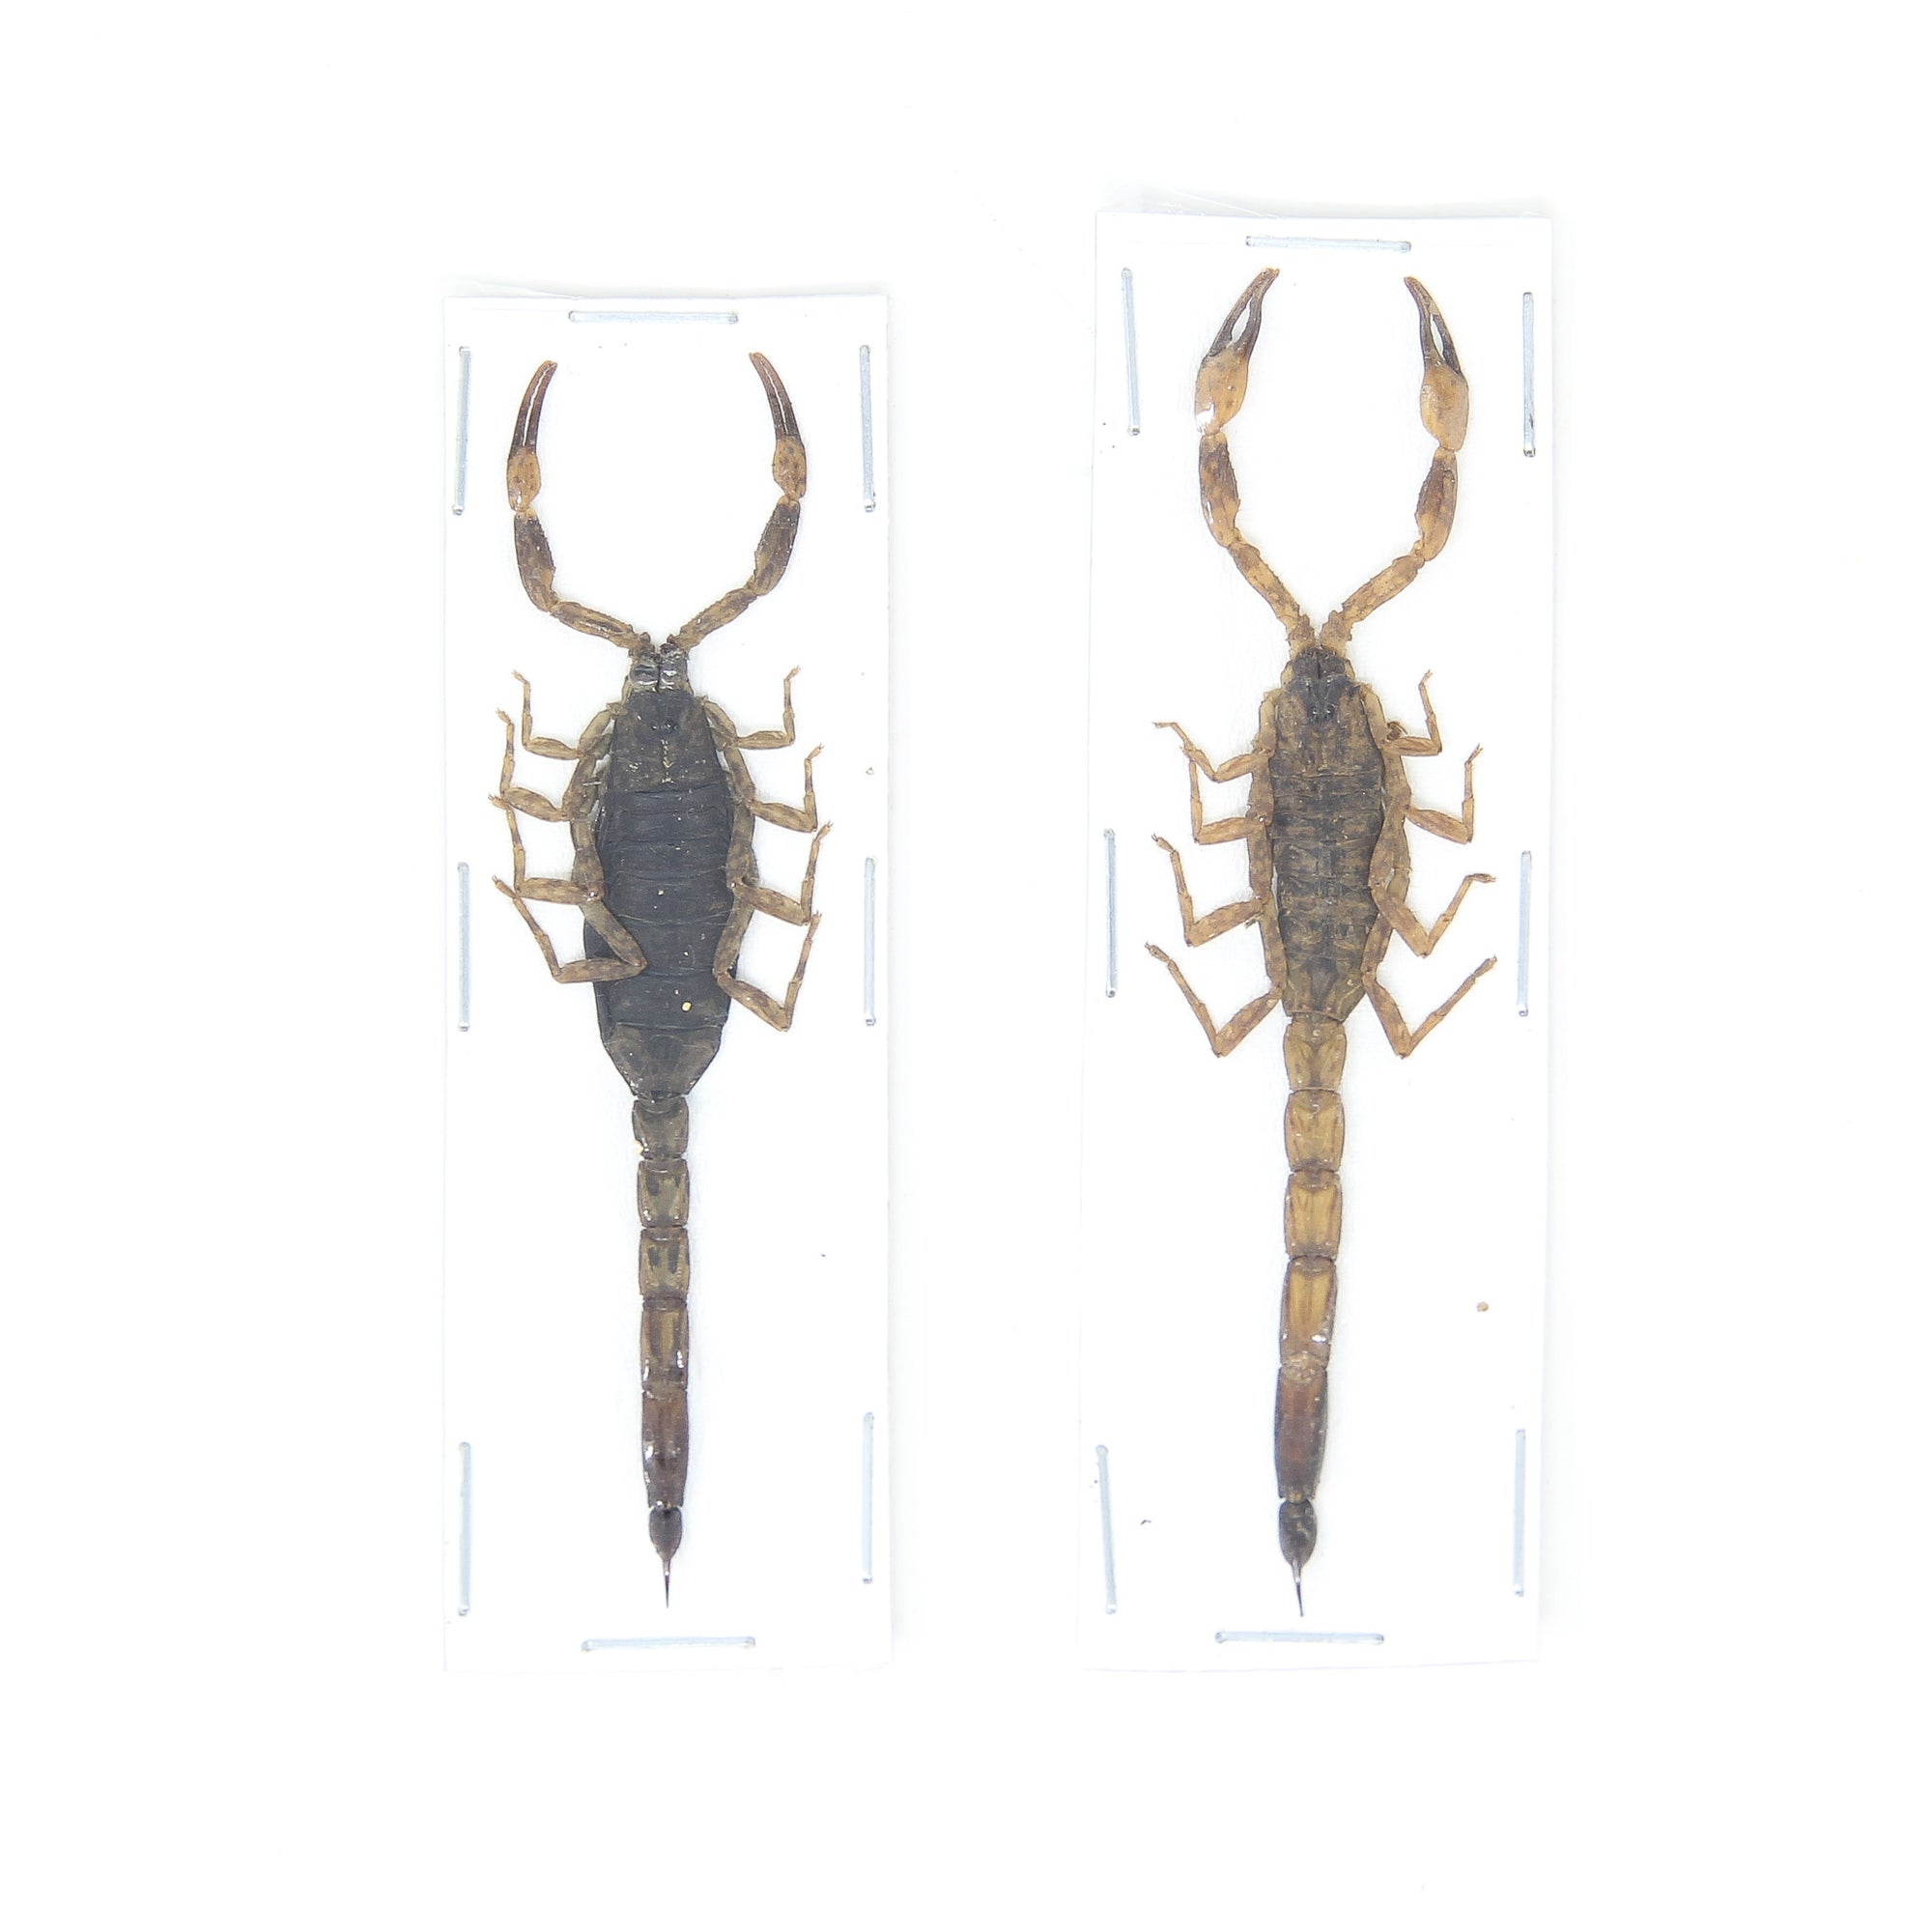 2 x Yellow Java Scorpions (Mesobuthus martensii) +/- 60mm A1 Entomology Specimens